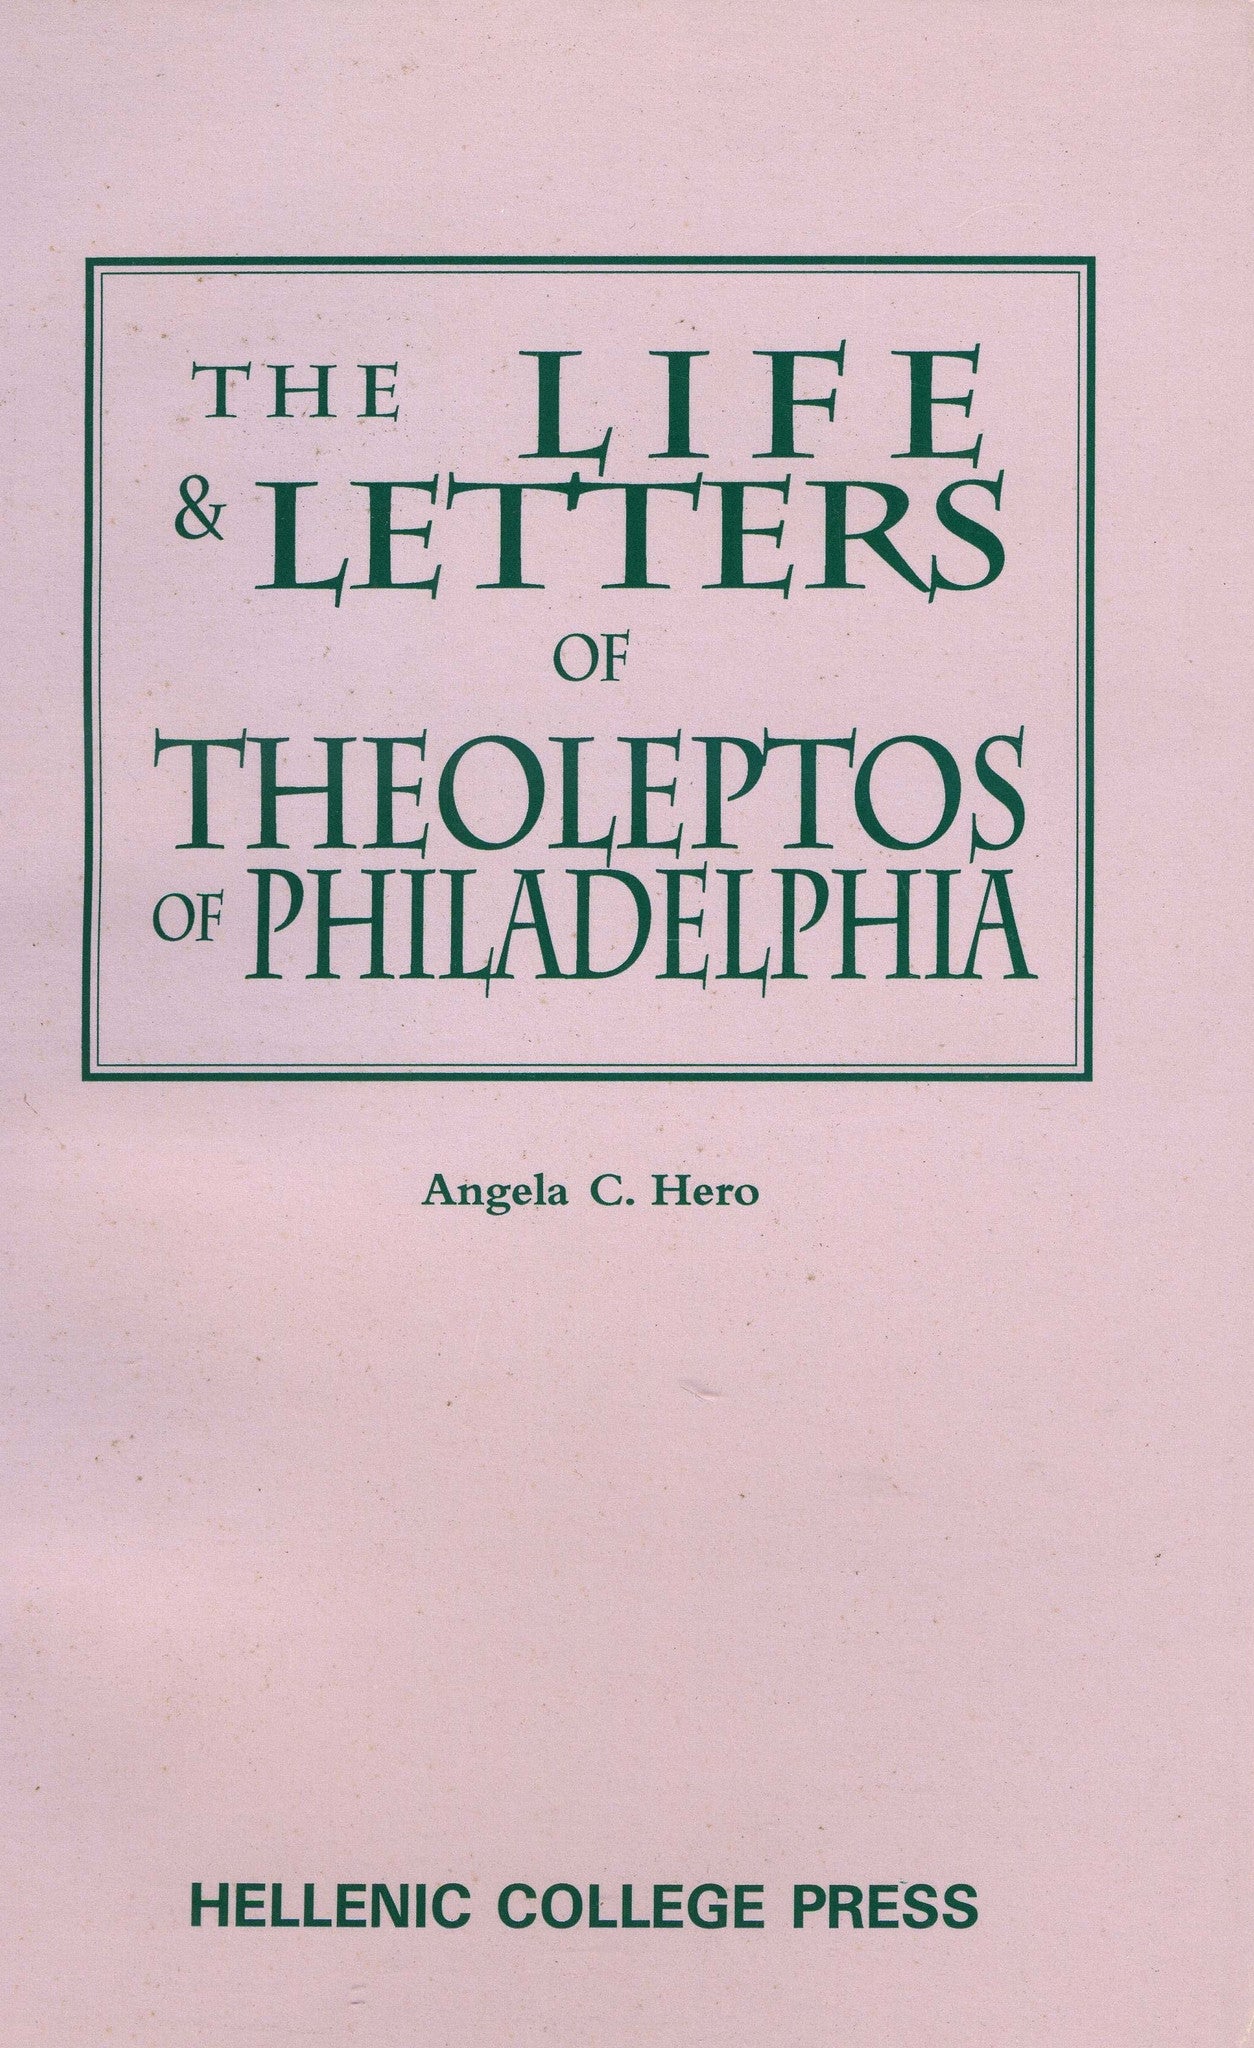 The Life & Letters of Theoleptos of Philadelphia